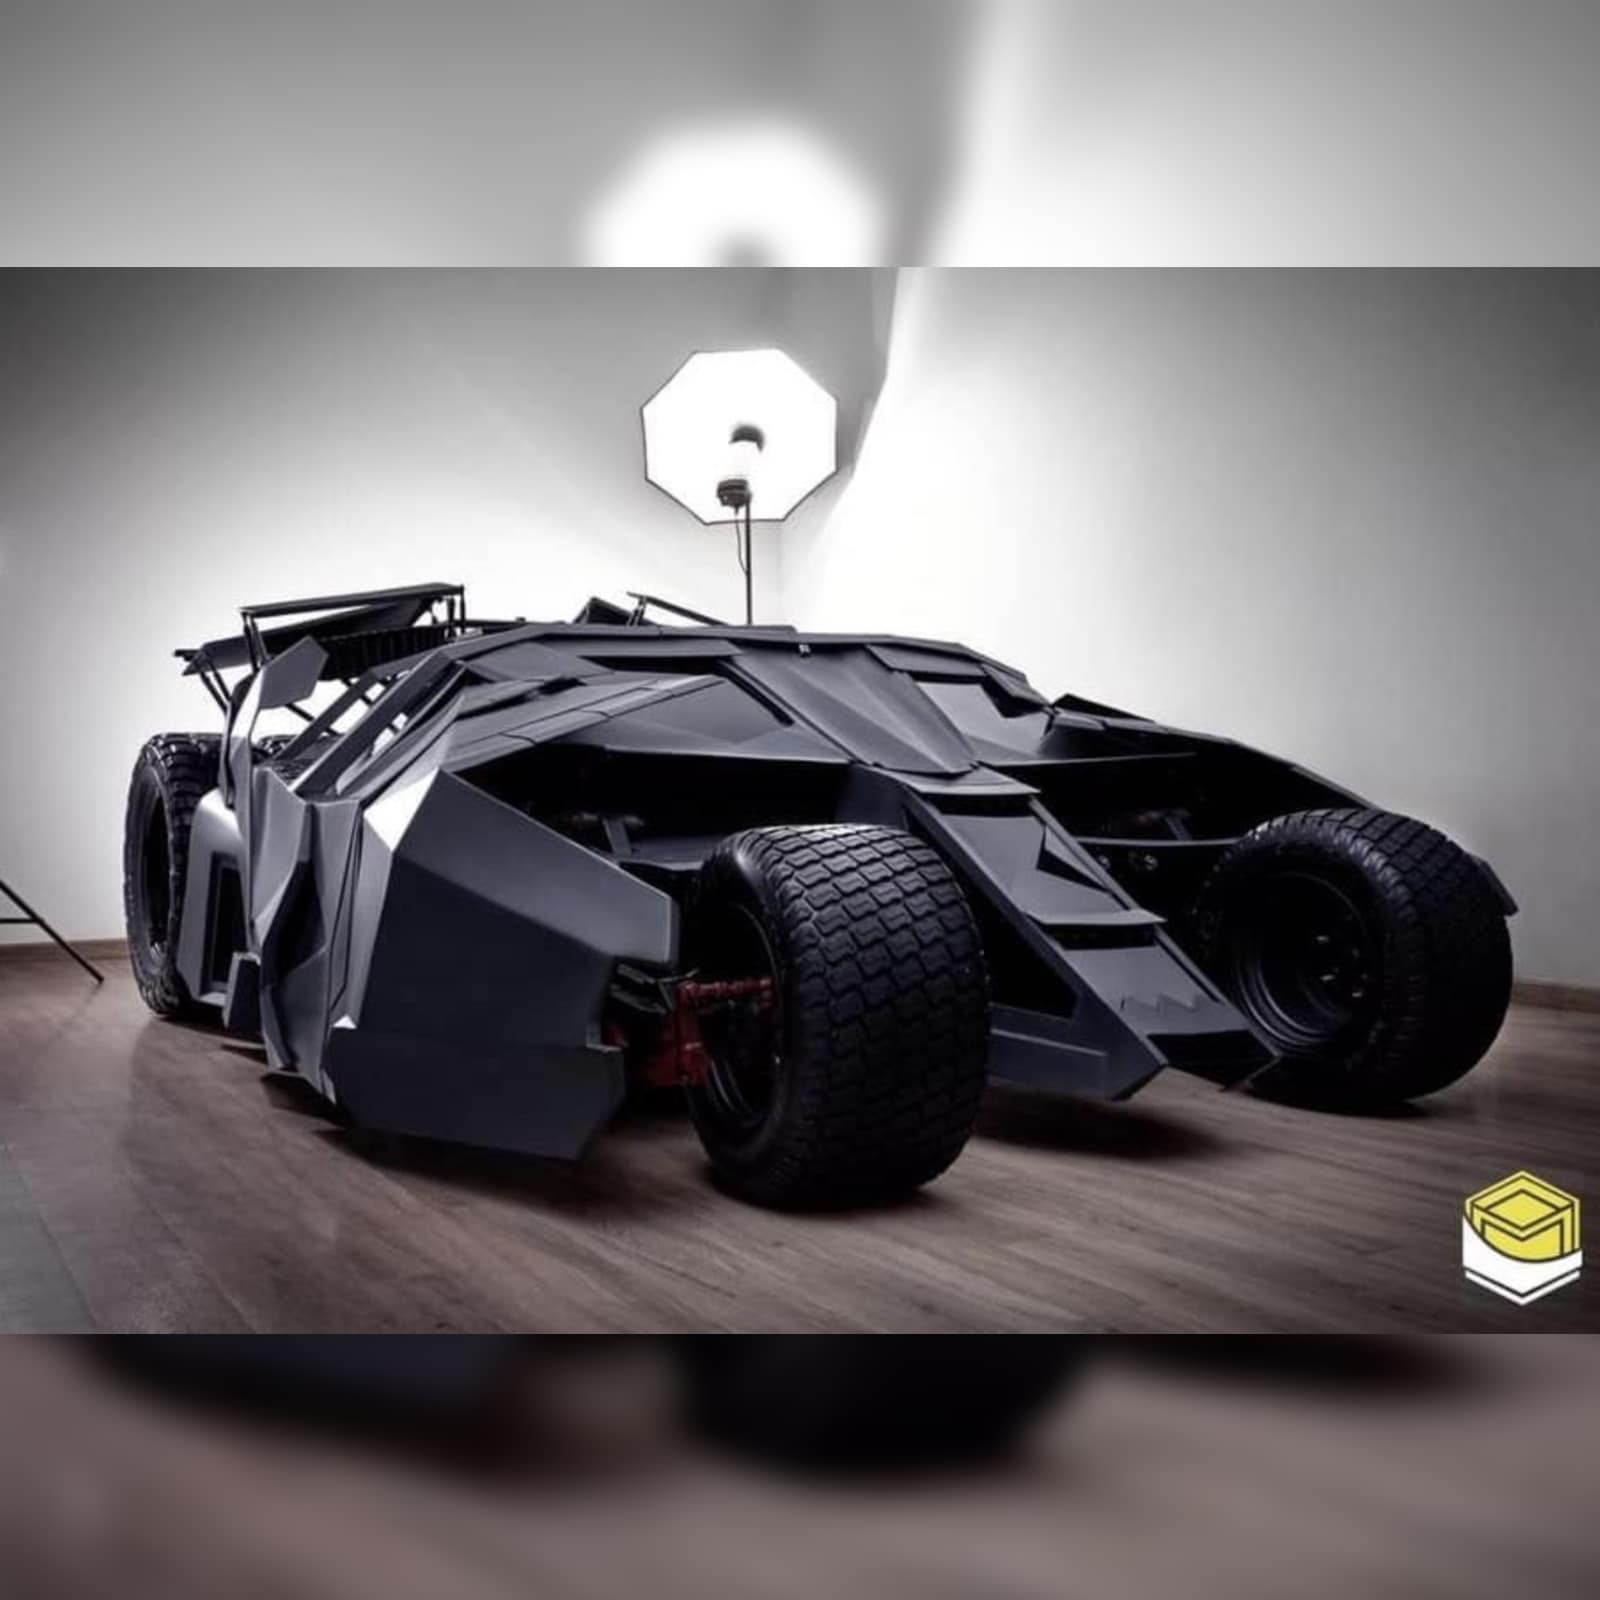 https://images.news18.com/ibnlive/uploads/2022/03/electric-batmobile.png